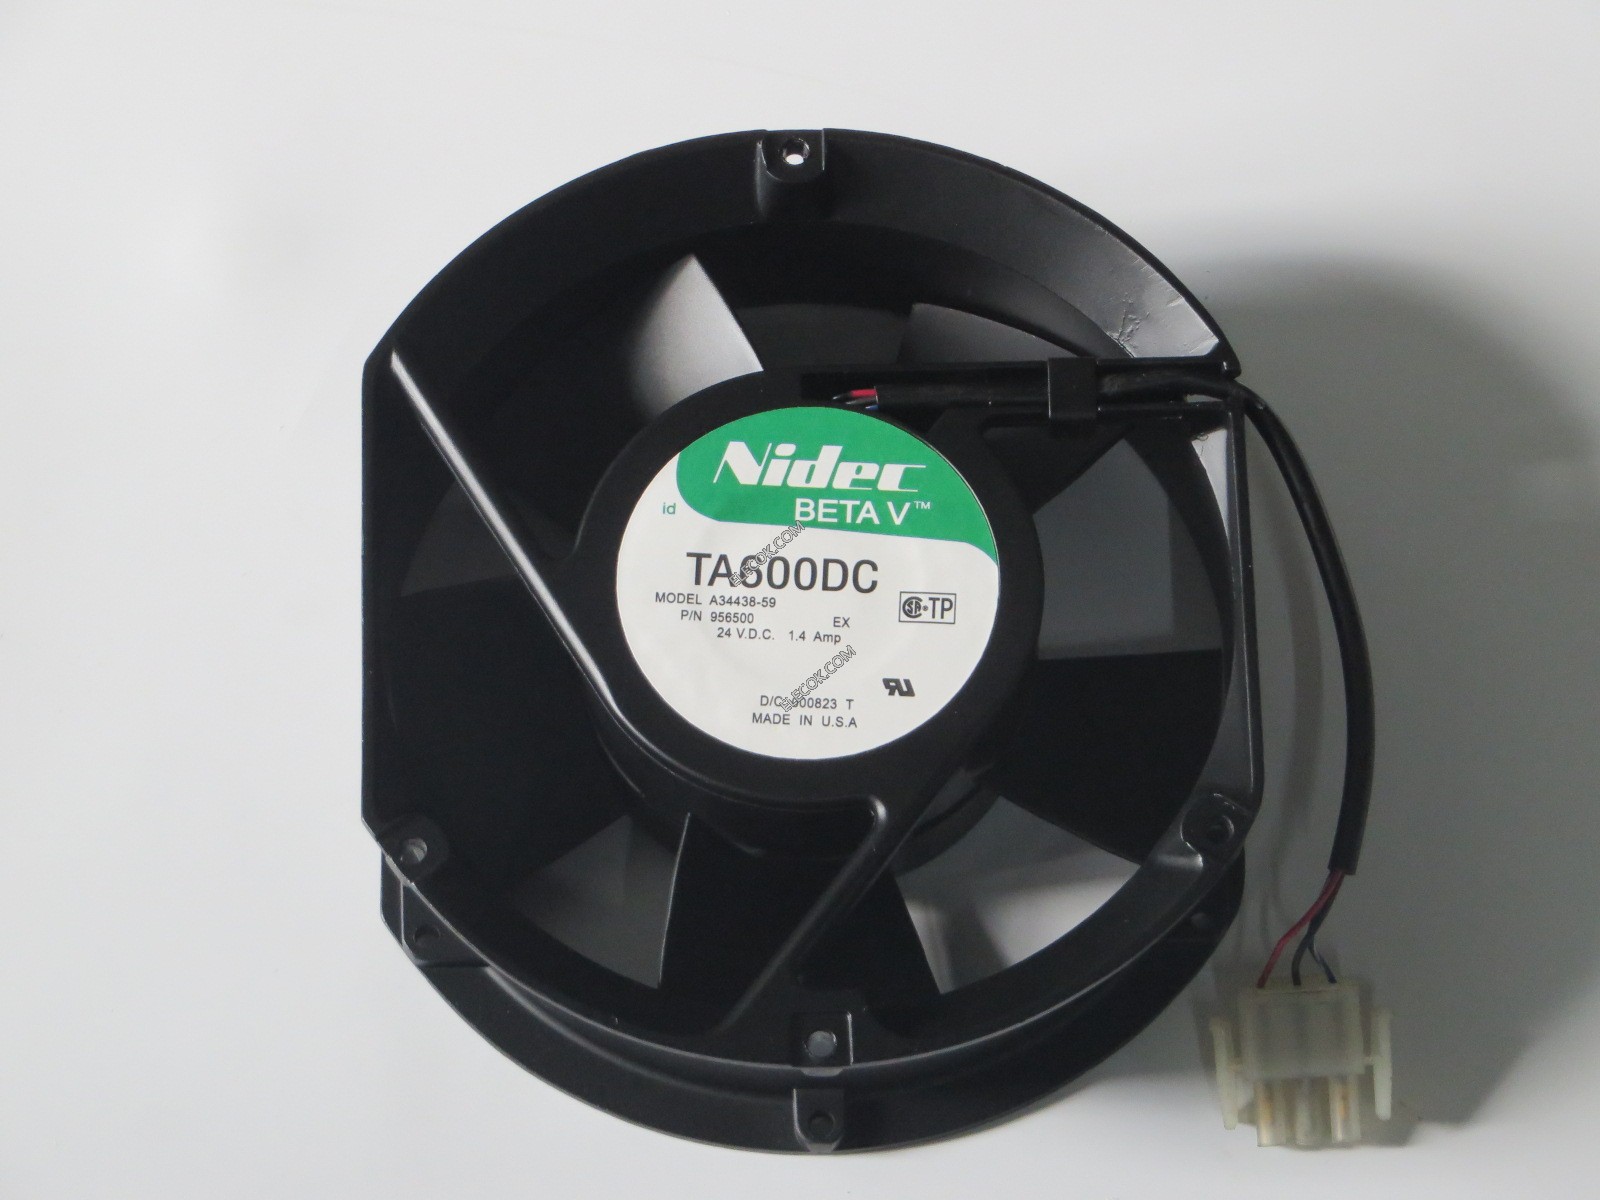 Nidec Beta V TA600DC A34457-10 956509 24VDC 84A Fan 